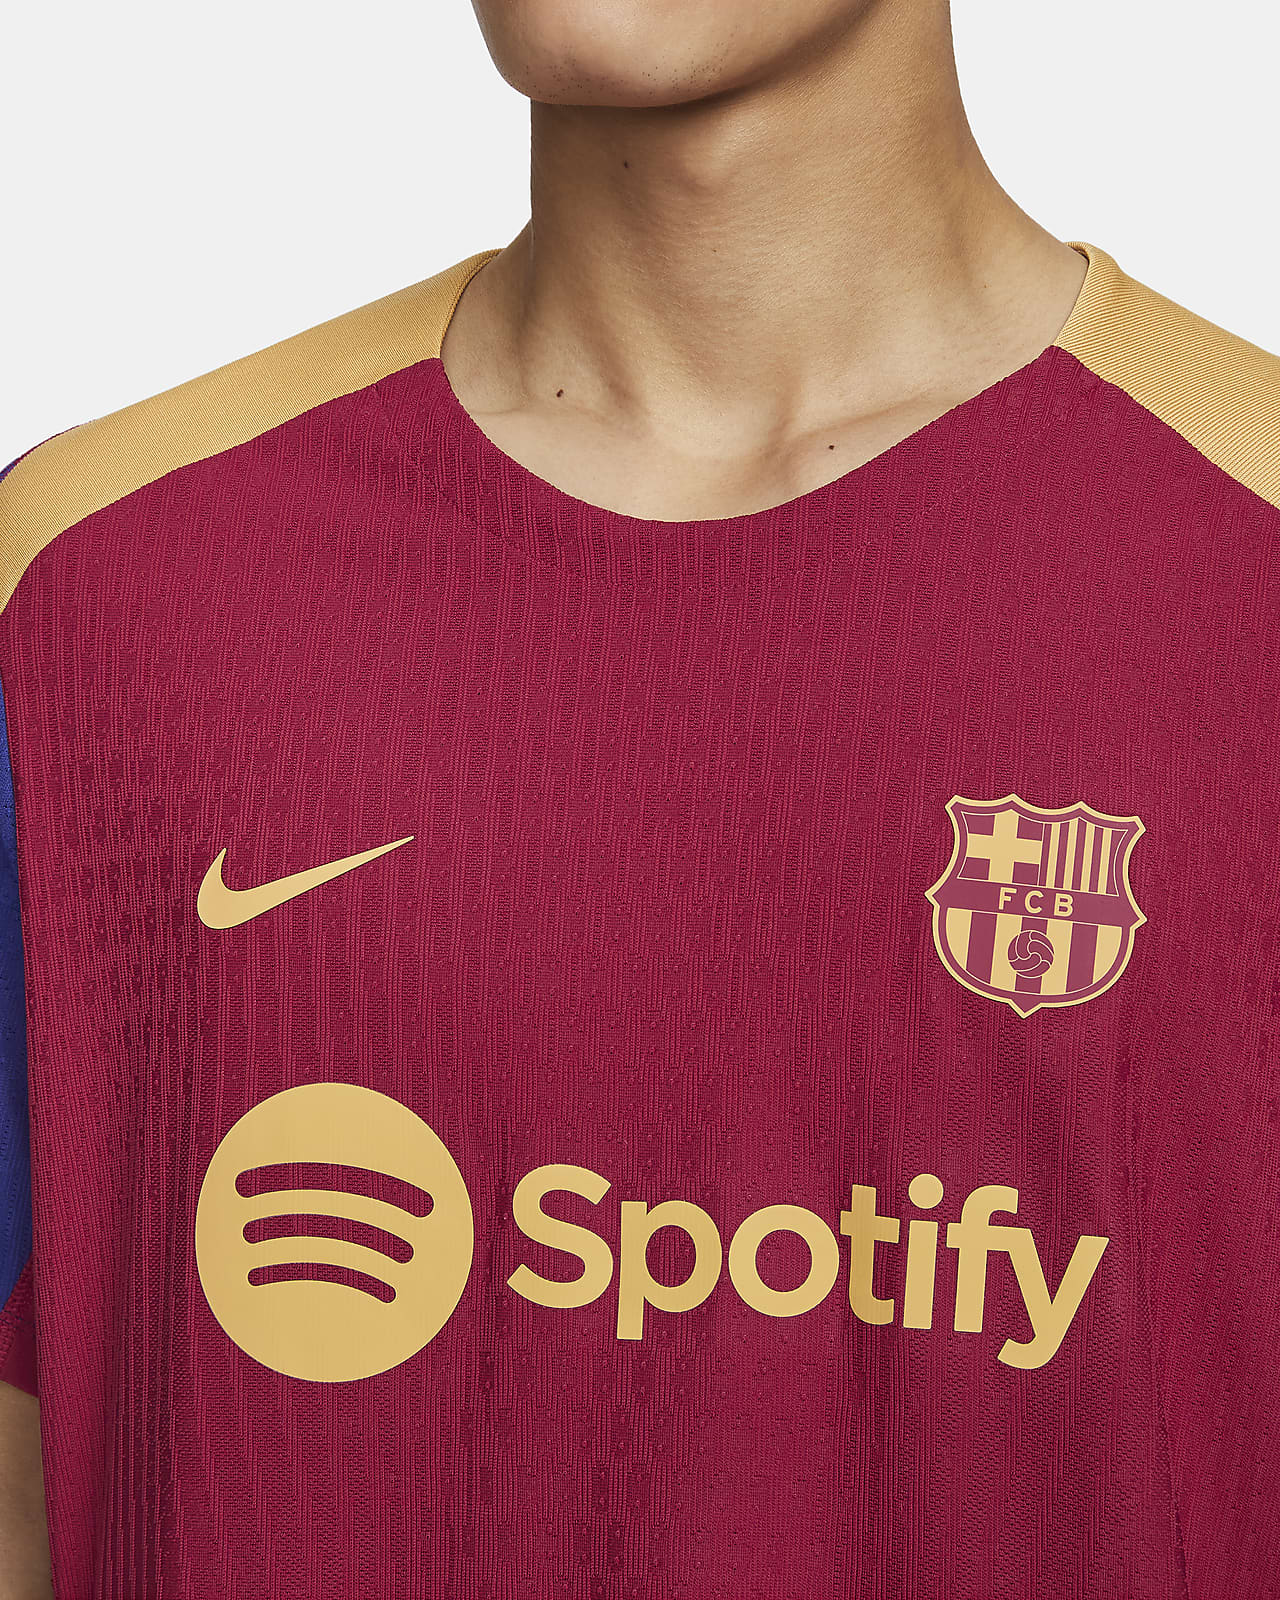 FC Barcelona Strike Elite Men's Nike Dri-FIT ADV Soccer Short-Sleeve Top